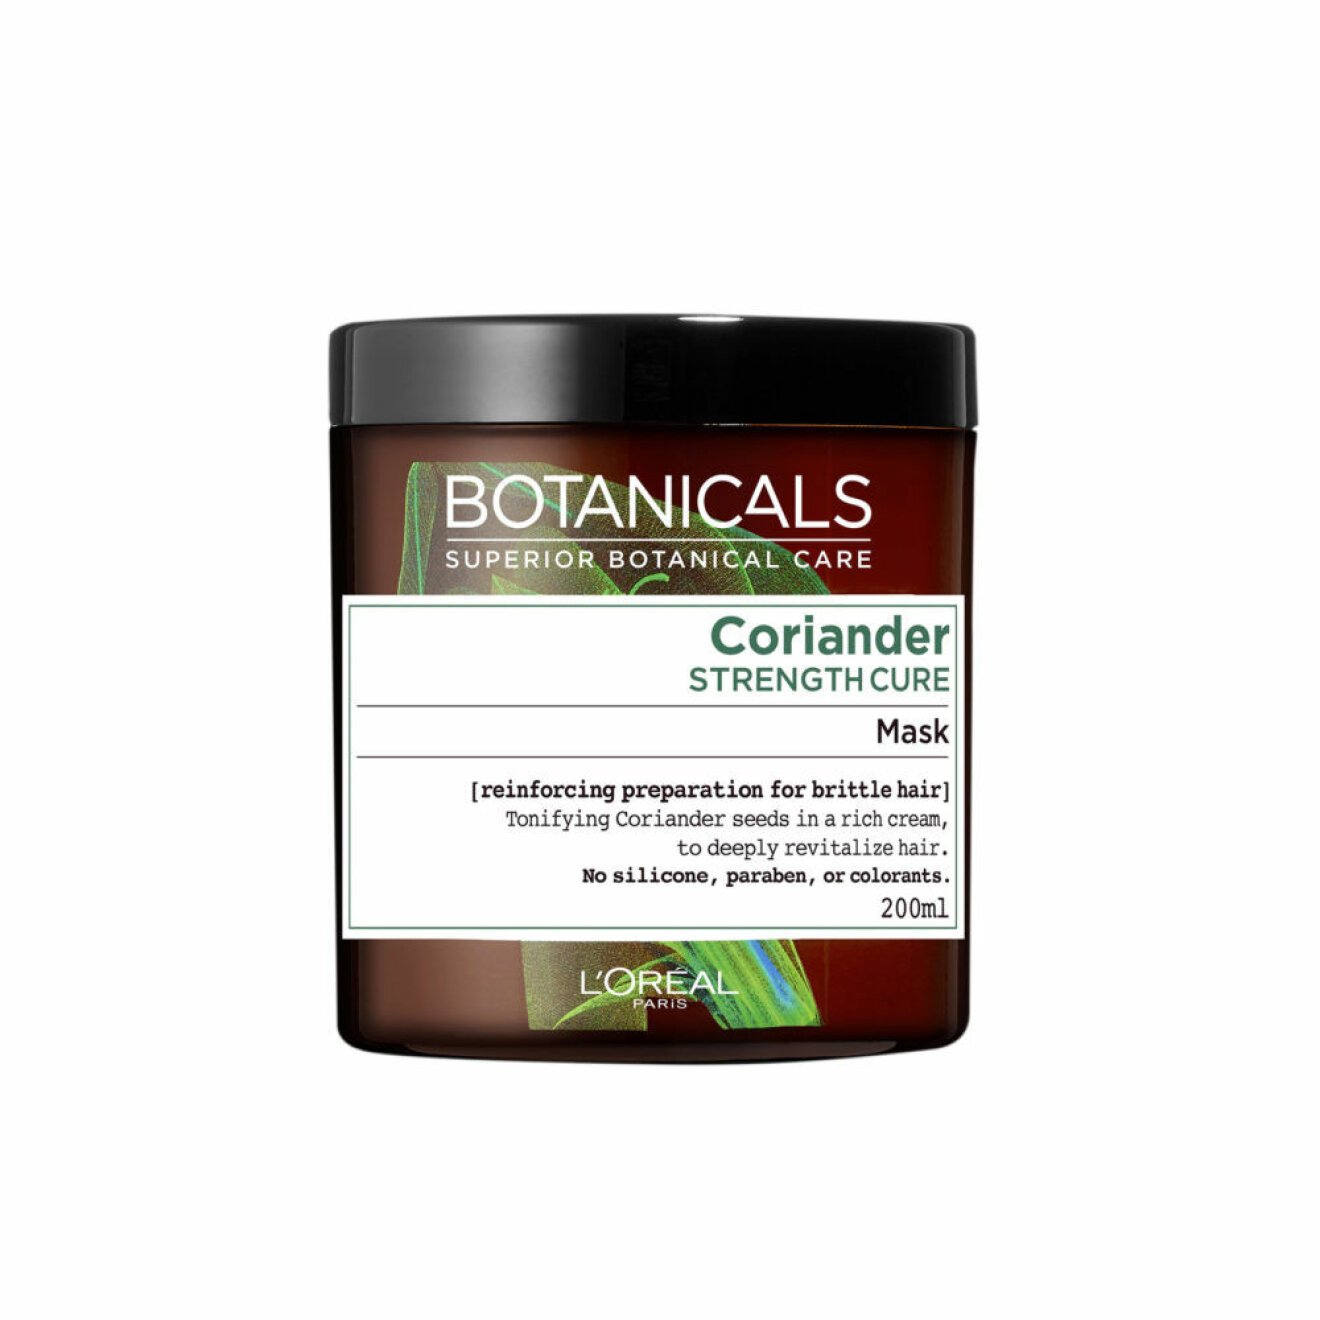 Botanicals fresh care coriander strength cure masque från L’Oréal Paris.